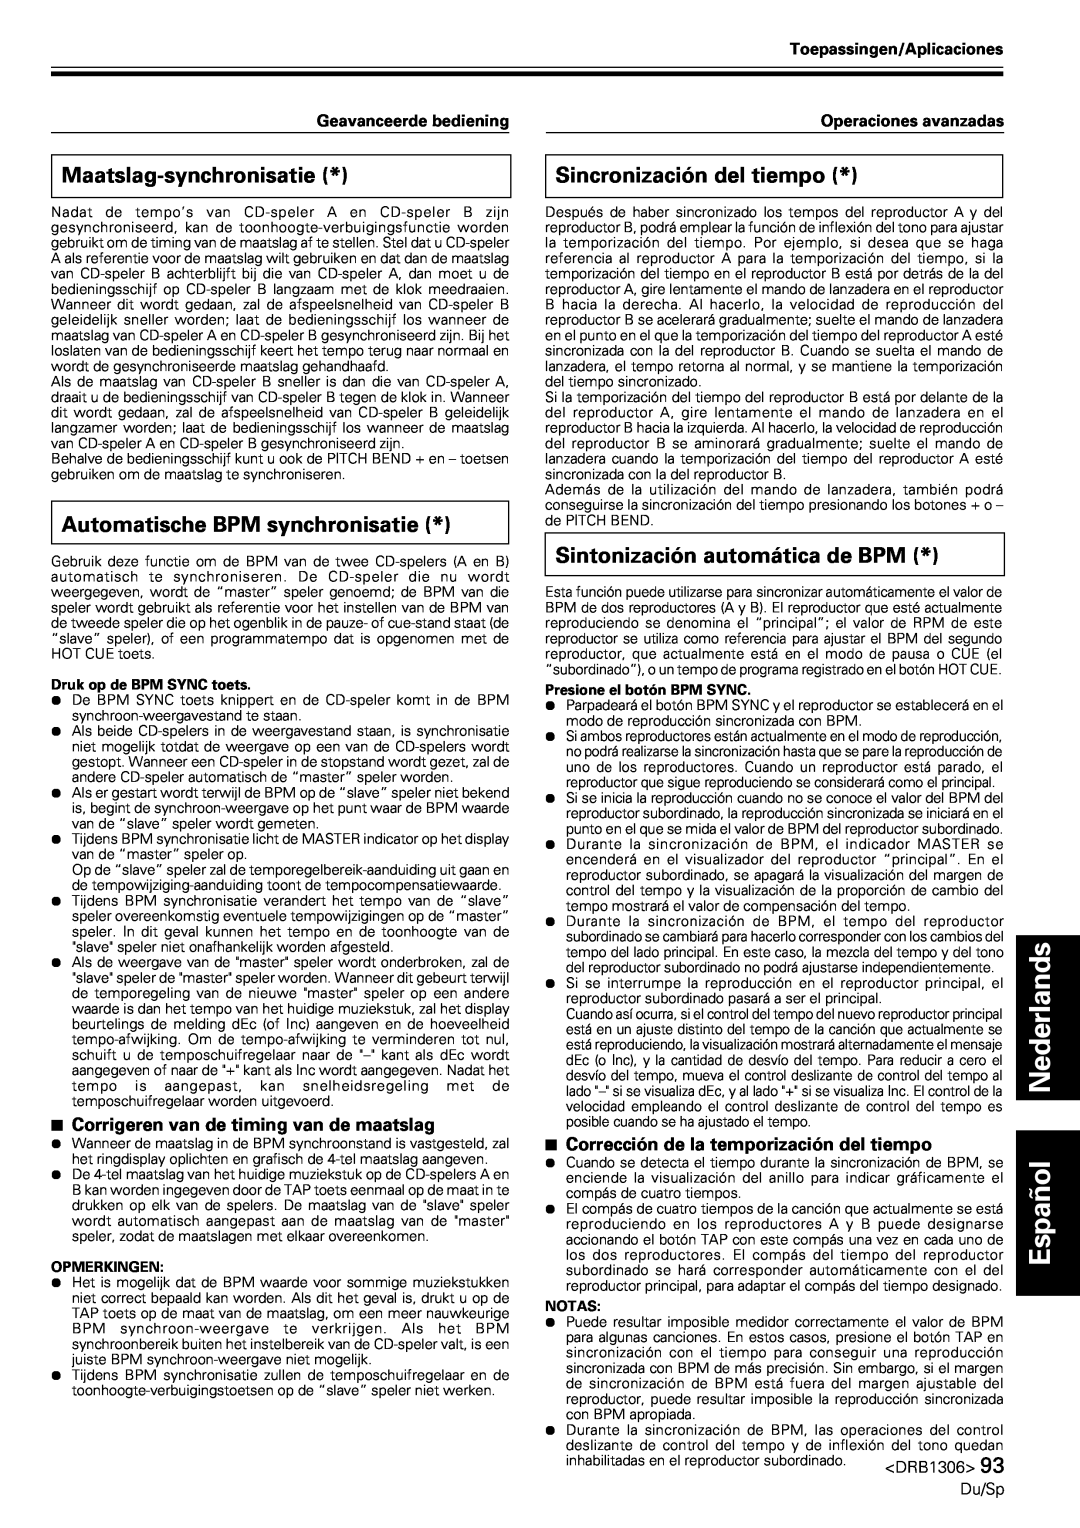 Pioneer CMX-3000 Maatslag-synchronisatie, Automatische BPM synchronisatie, Sincronización del tiempo, Español Nederlands 